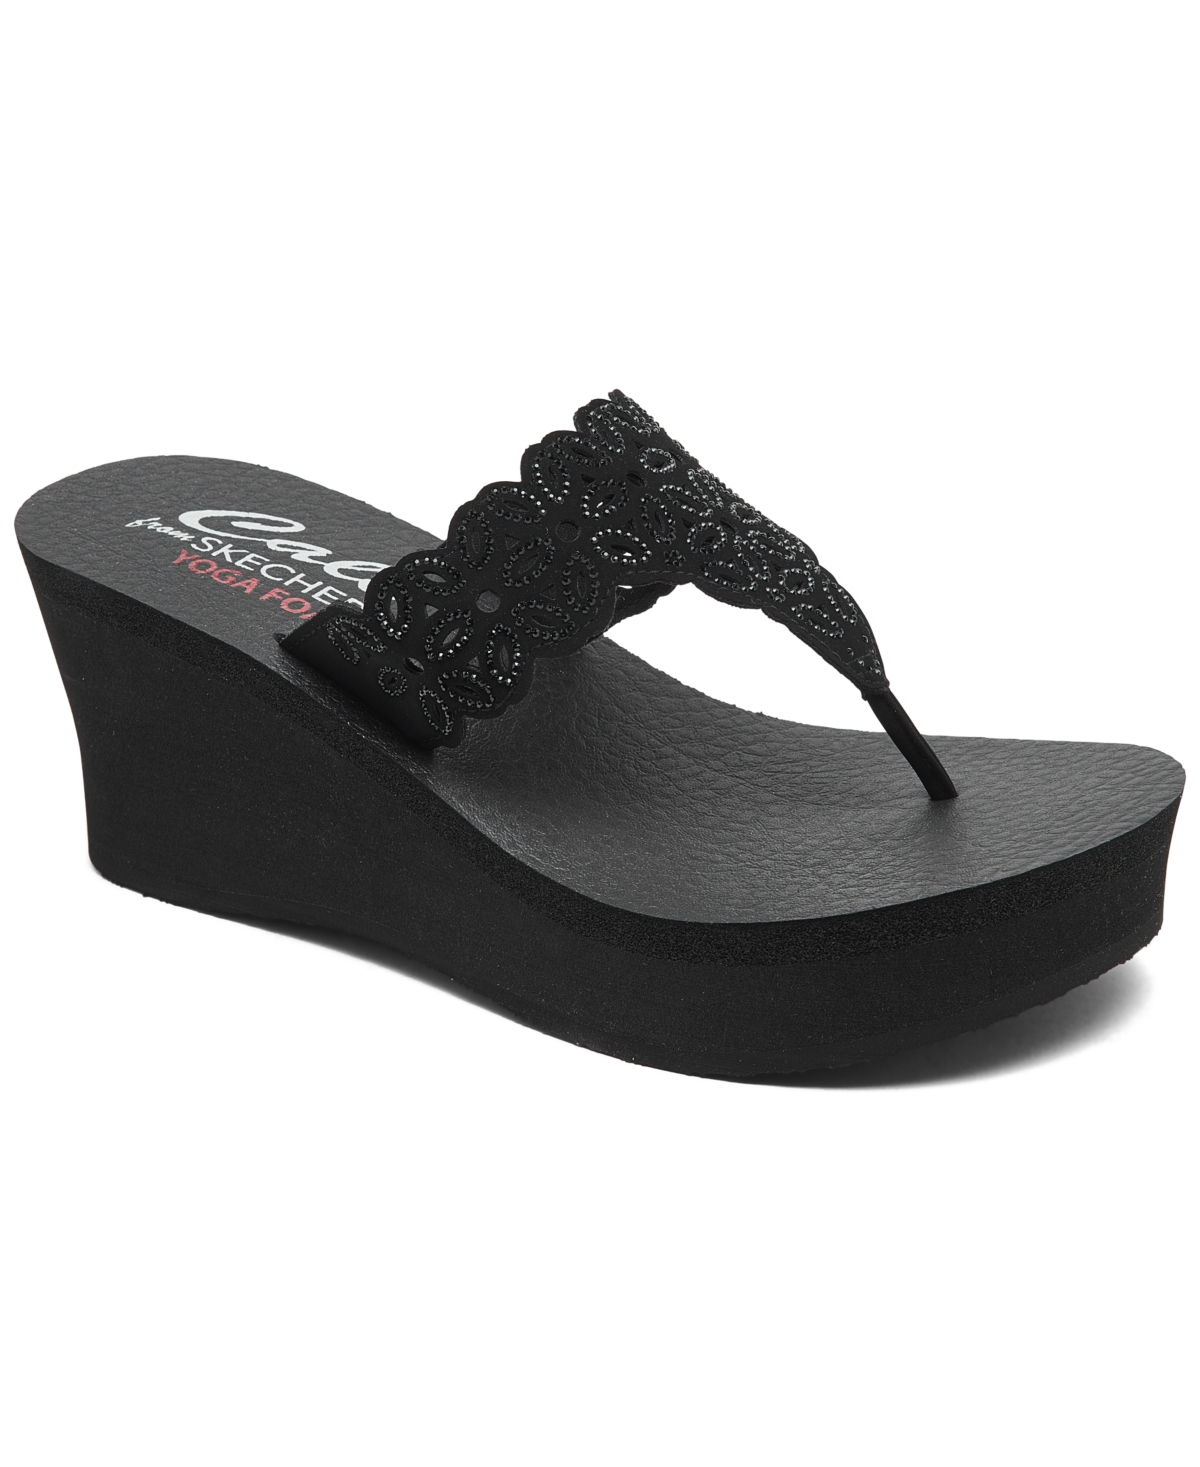 Women's Cali Padma Wedge Sandals from Finish Line - Black